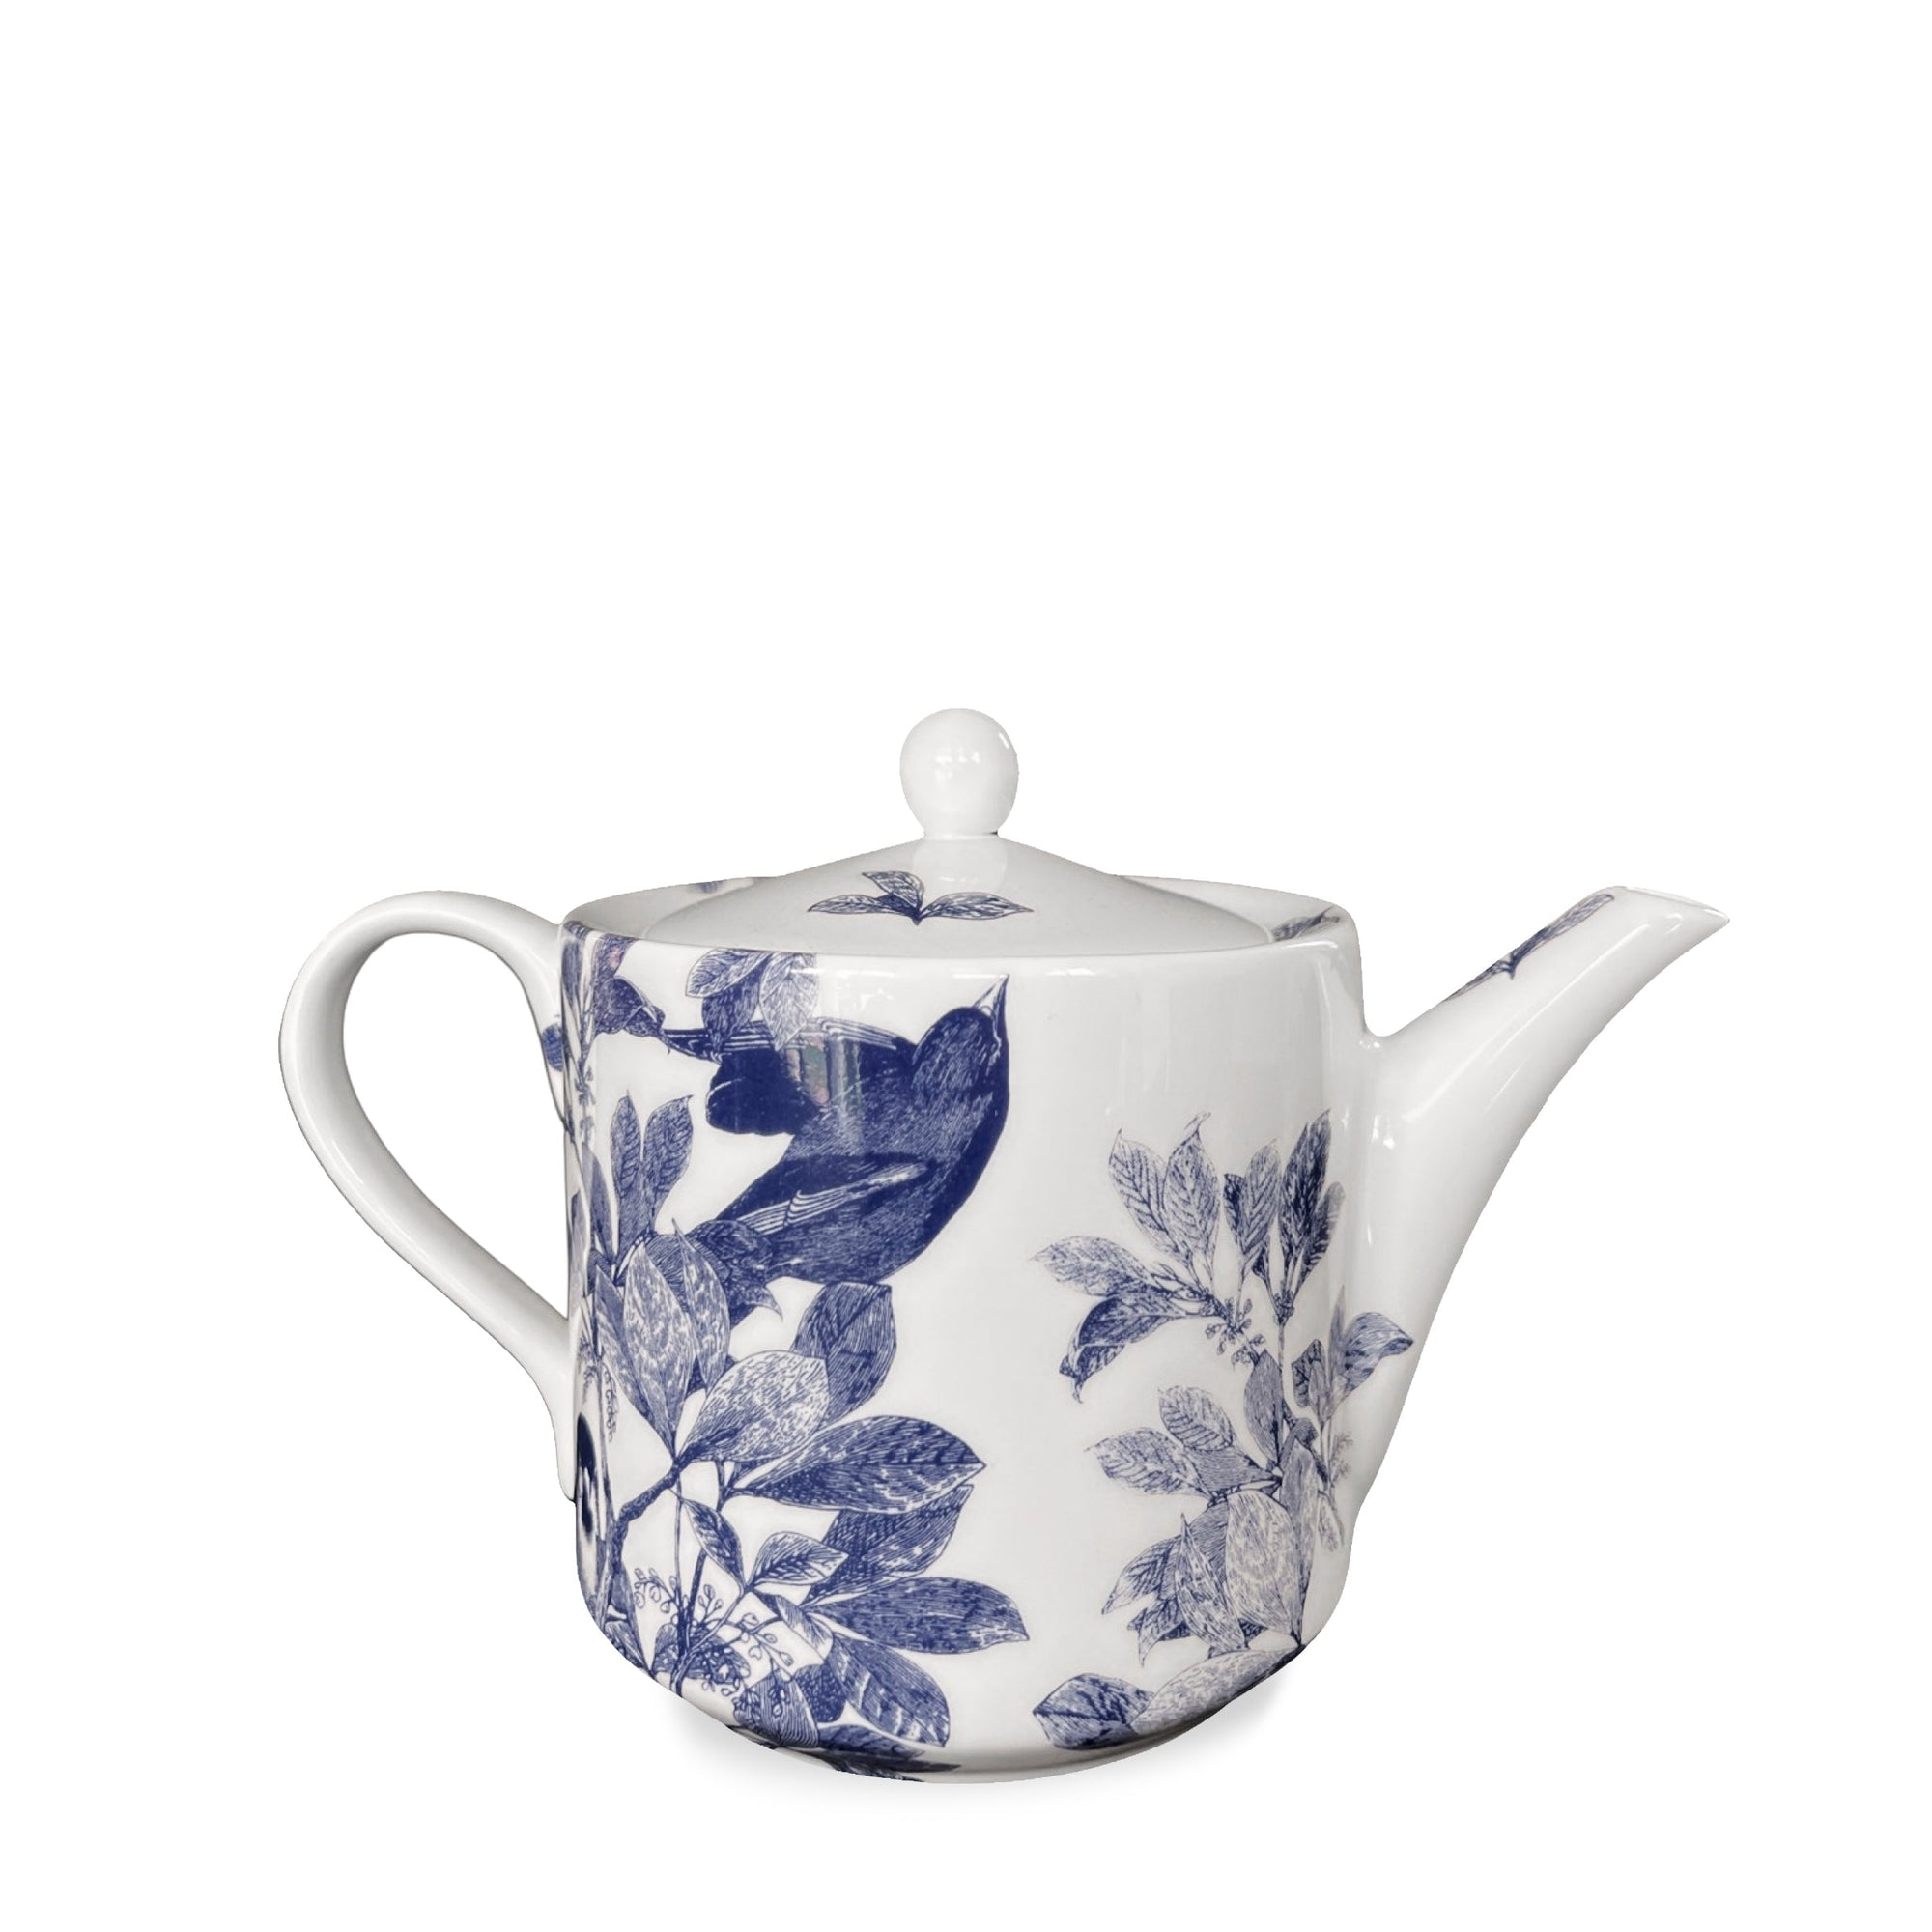 Arbor blue and white bone china teapot from Caskata.